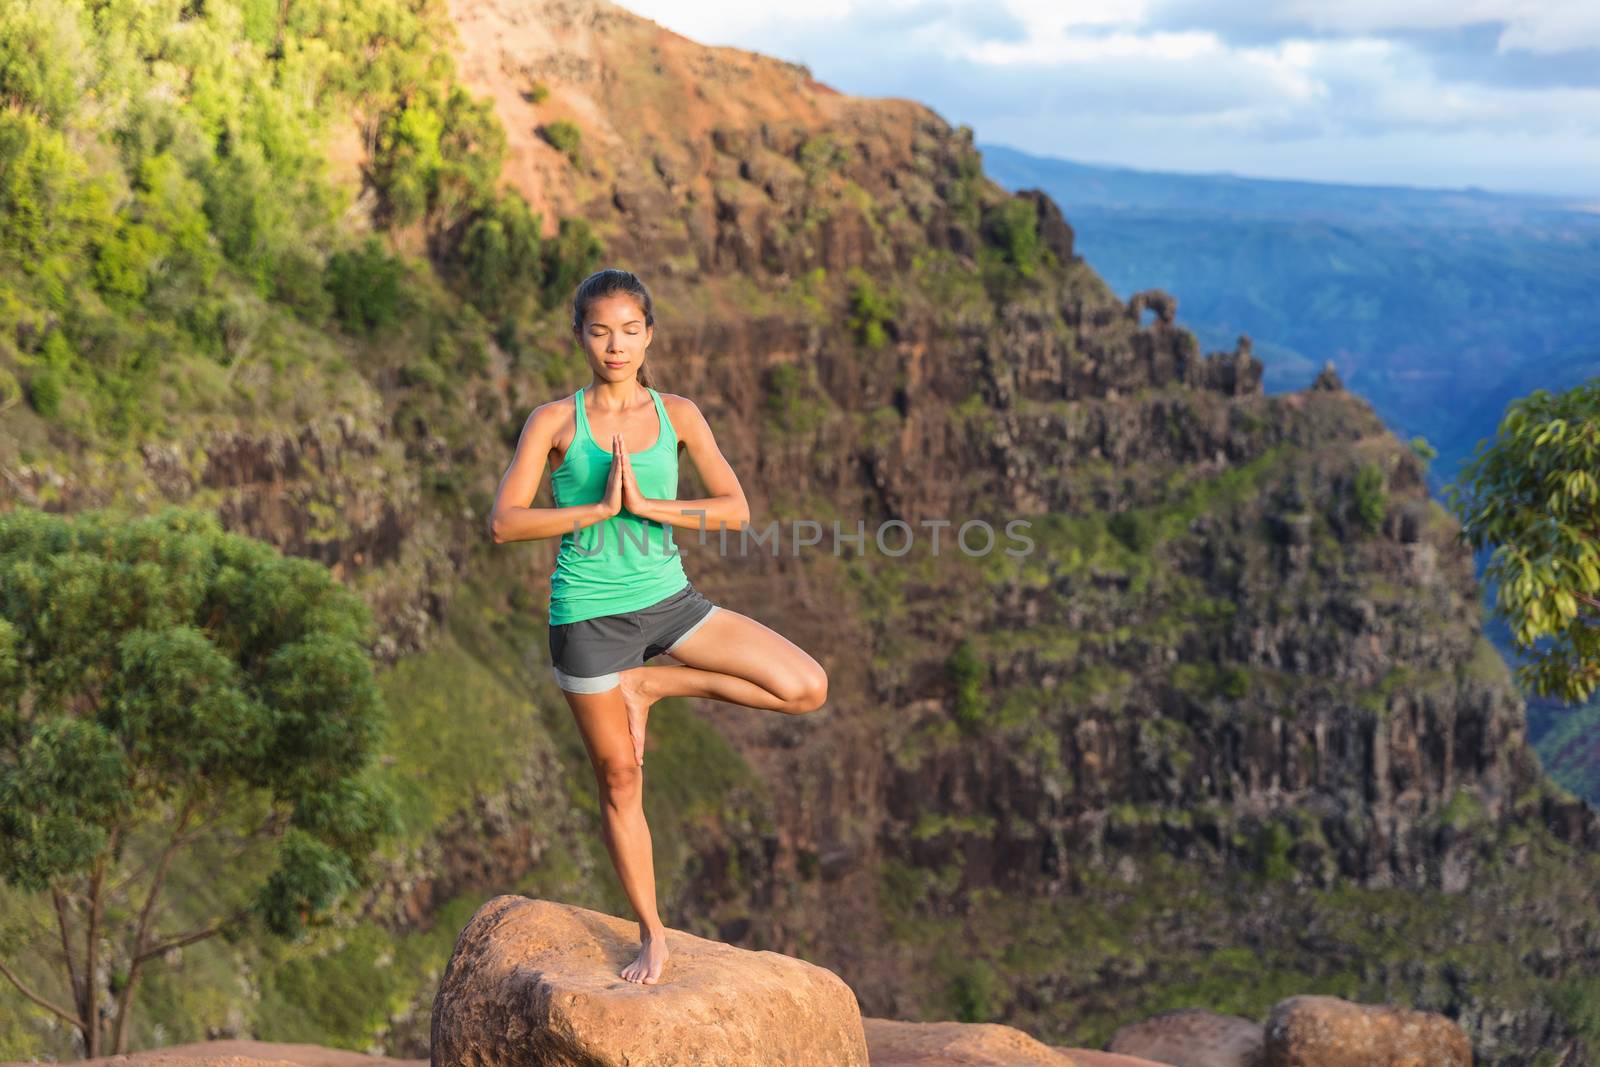 Yoga tree pose woman meditating in nature by Maridav